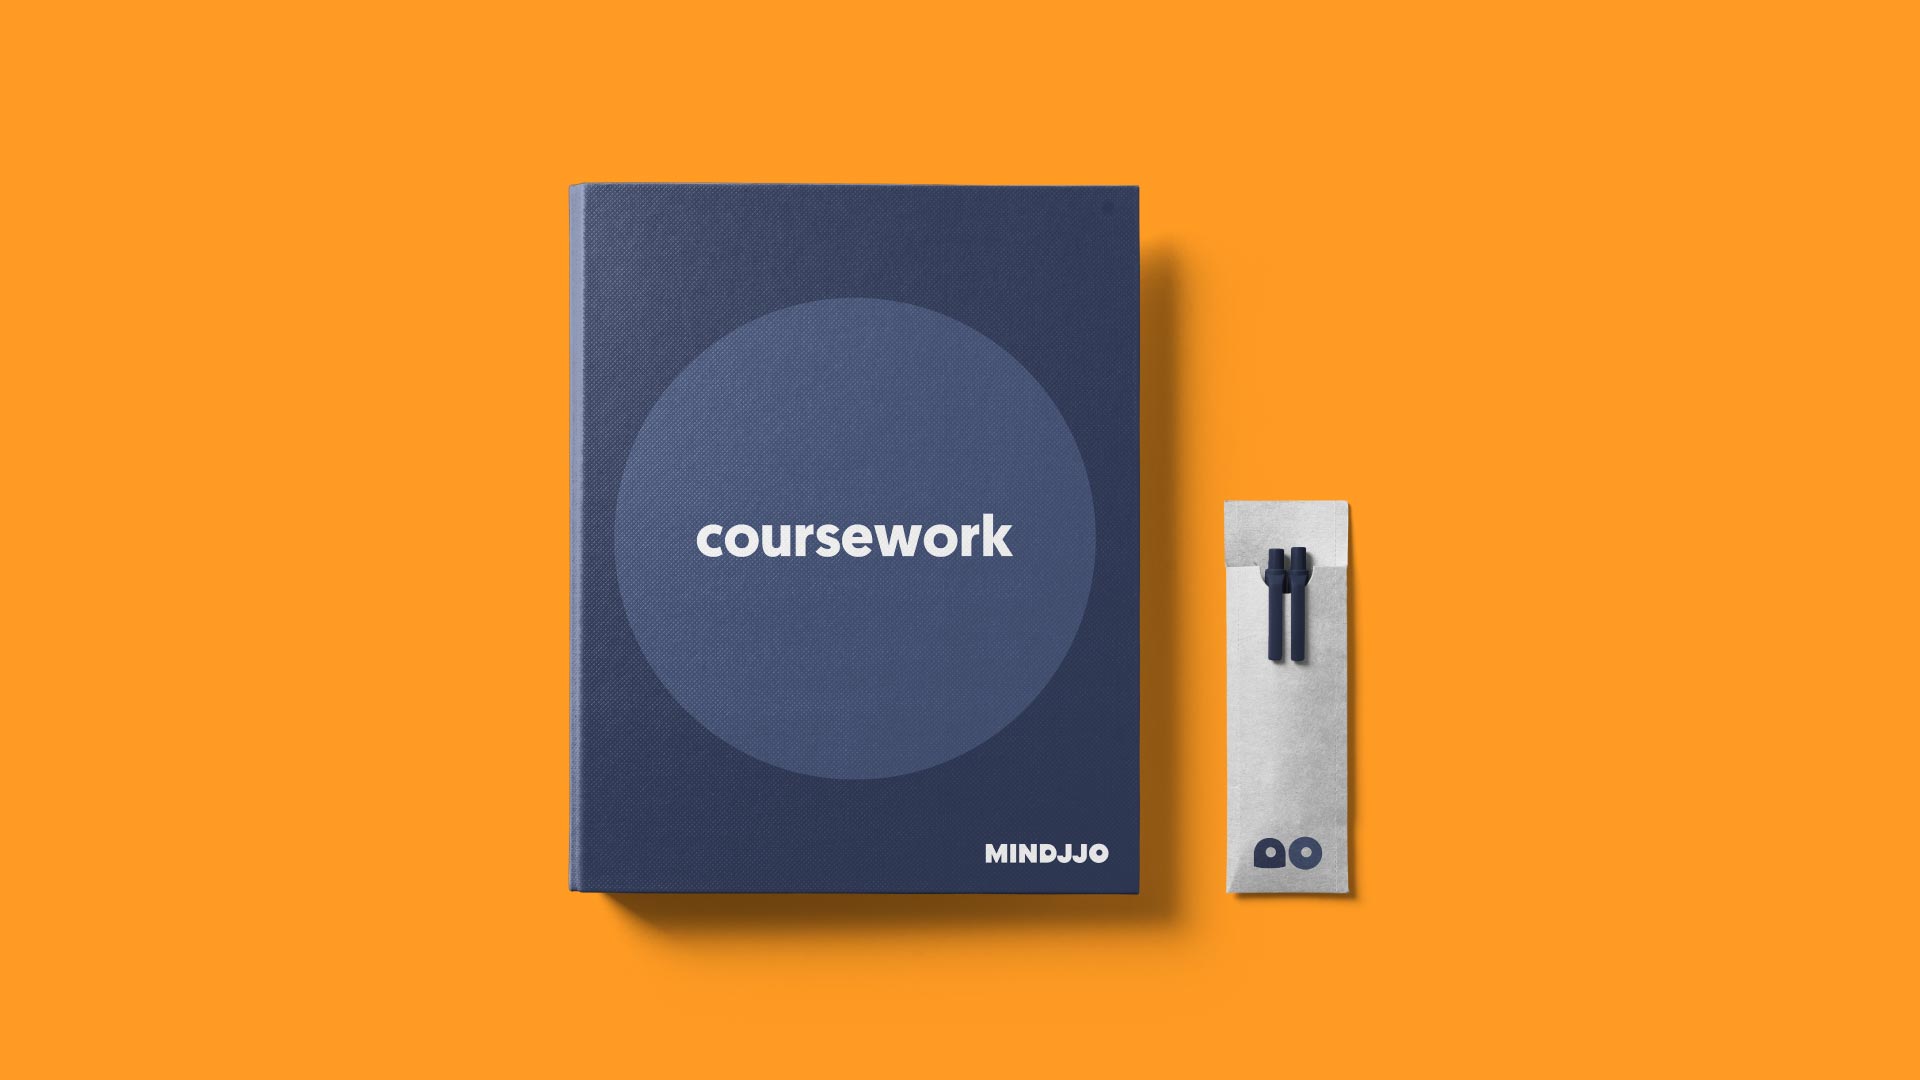 Mindjjo branded coursework folder and pens.